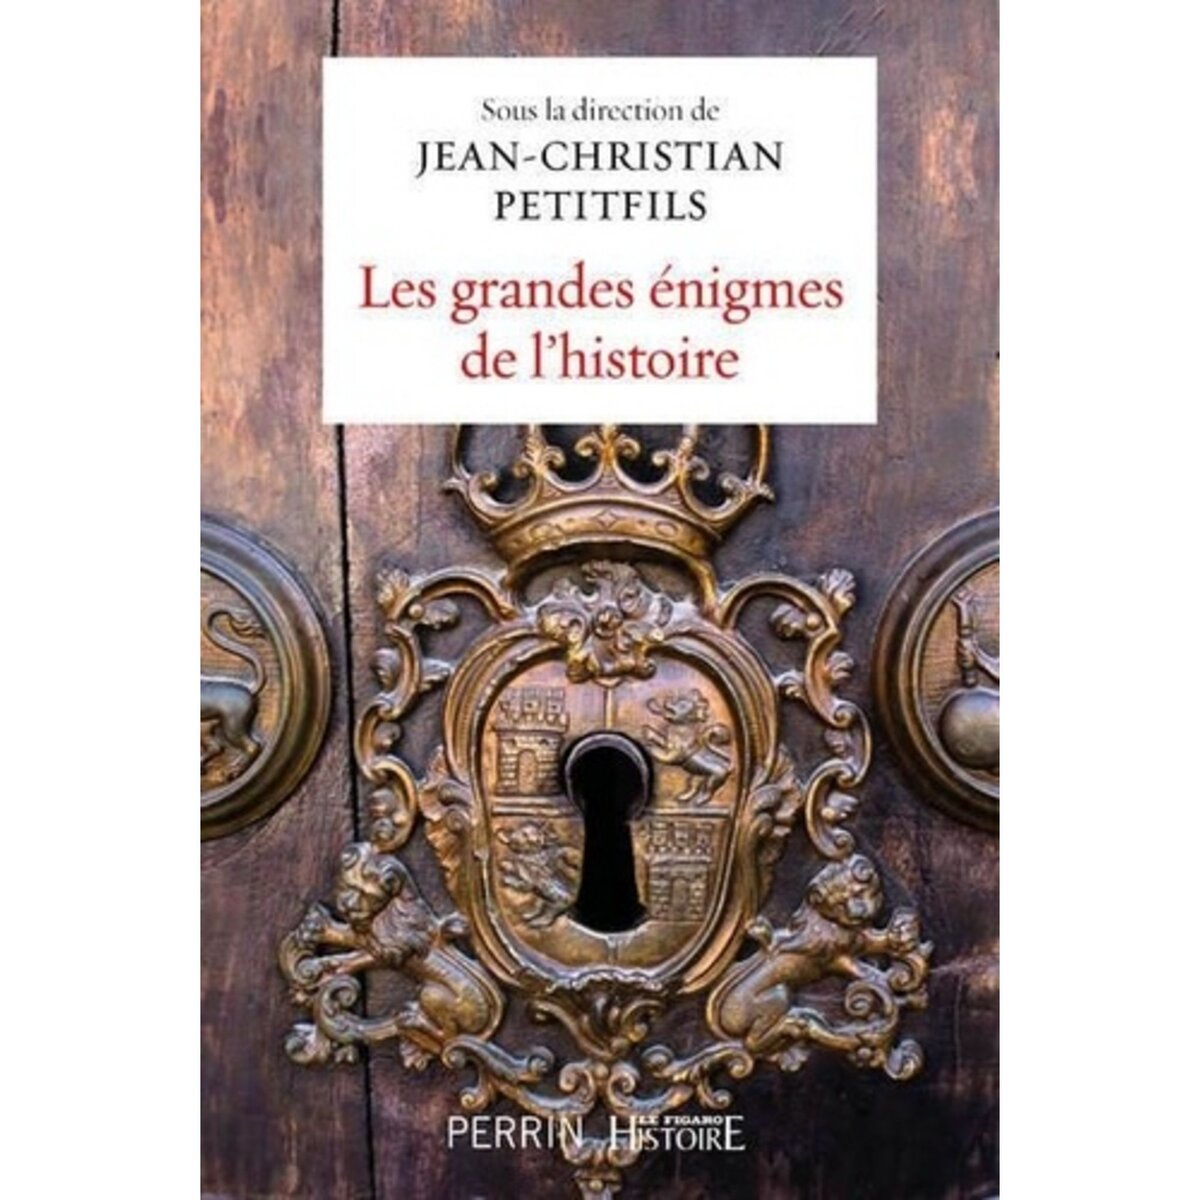  LES GRANDES ENIGMES DE L'HISTOIRE, Petitfils Jean-Christian